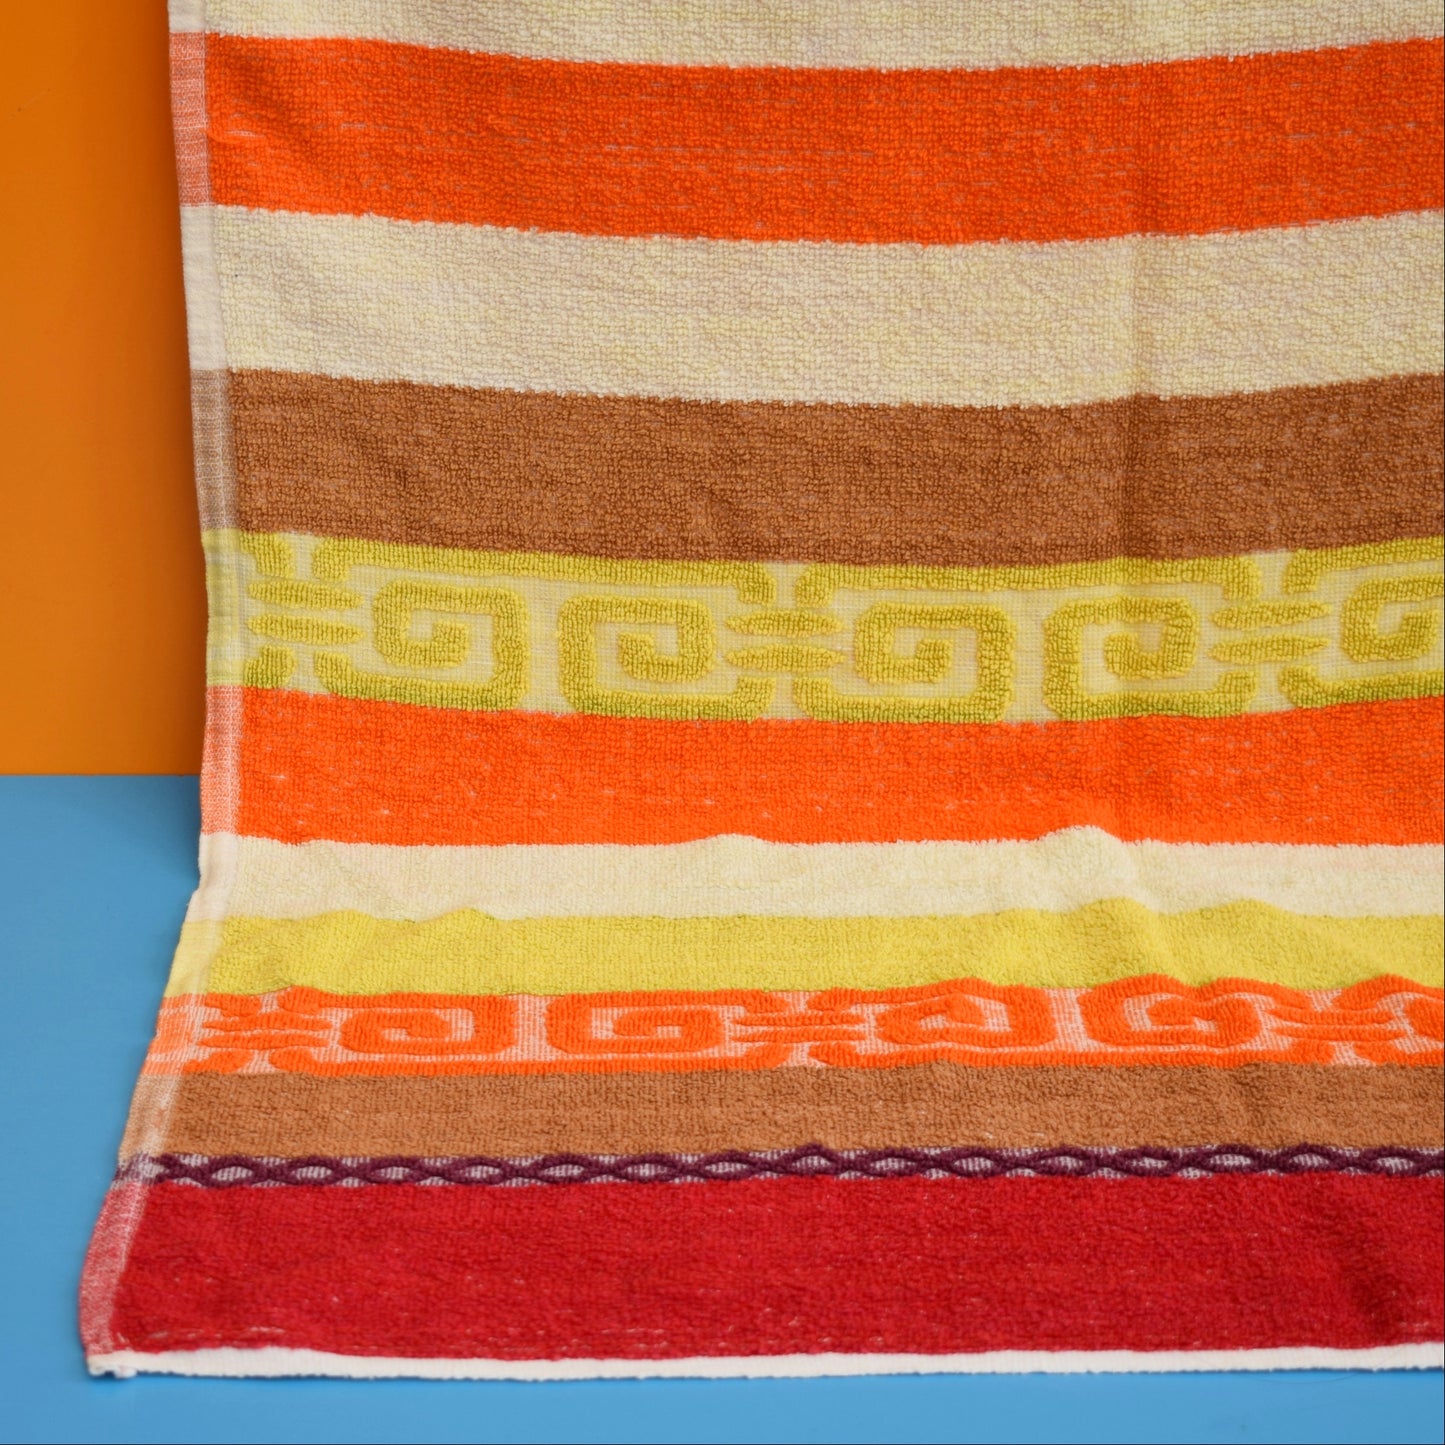 Vintage 1960s Cotton Towels - Striped Red / Orange